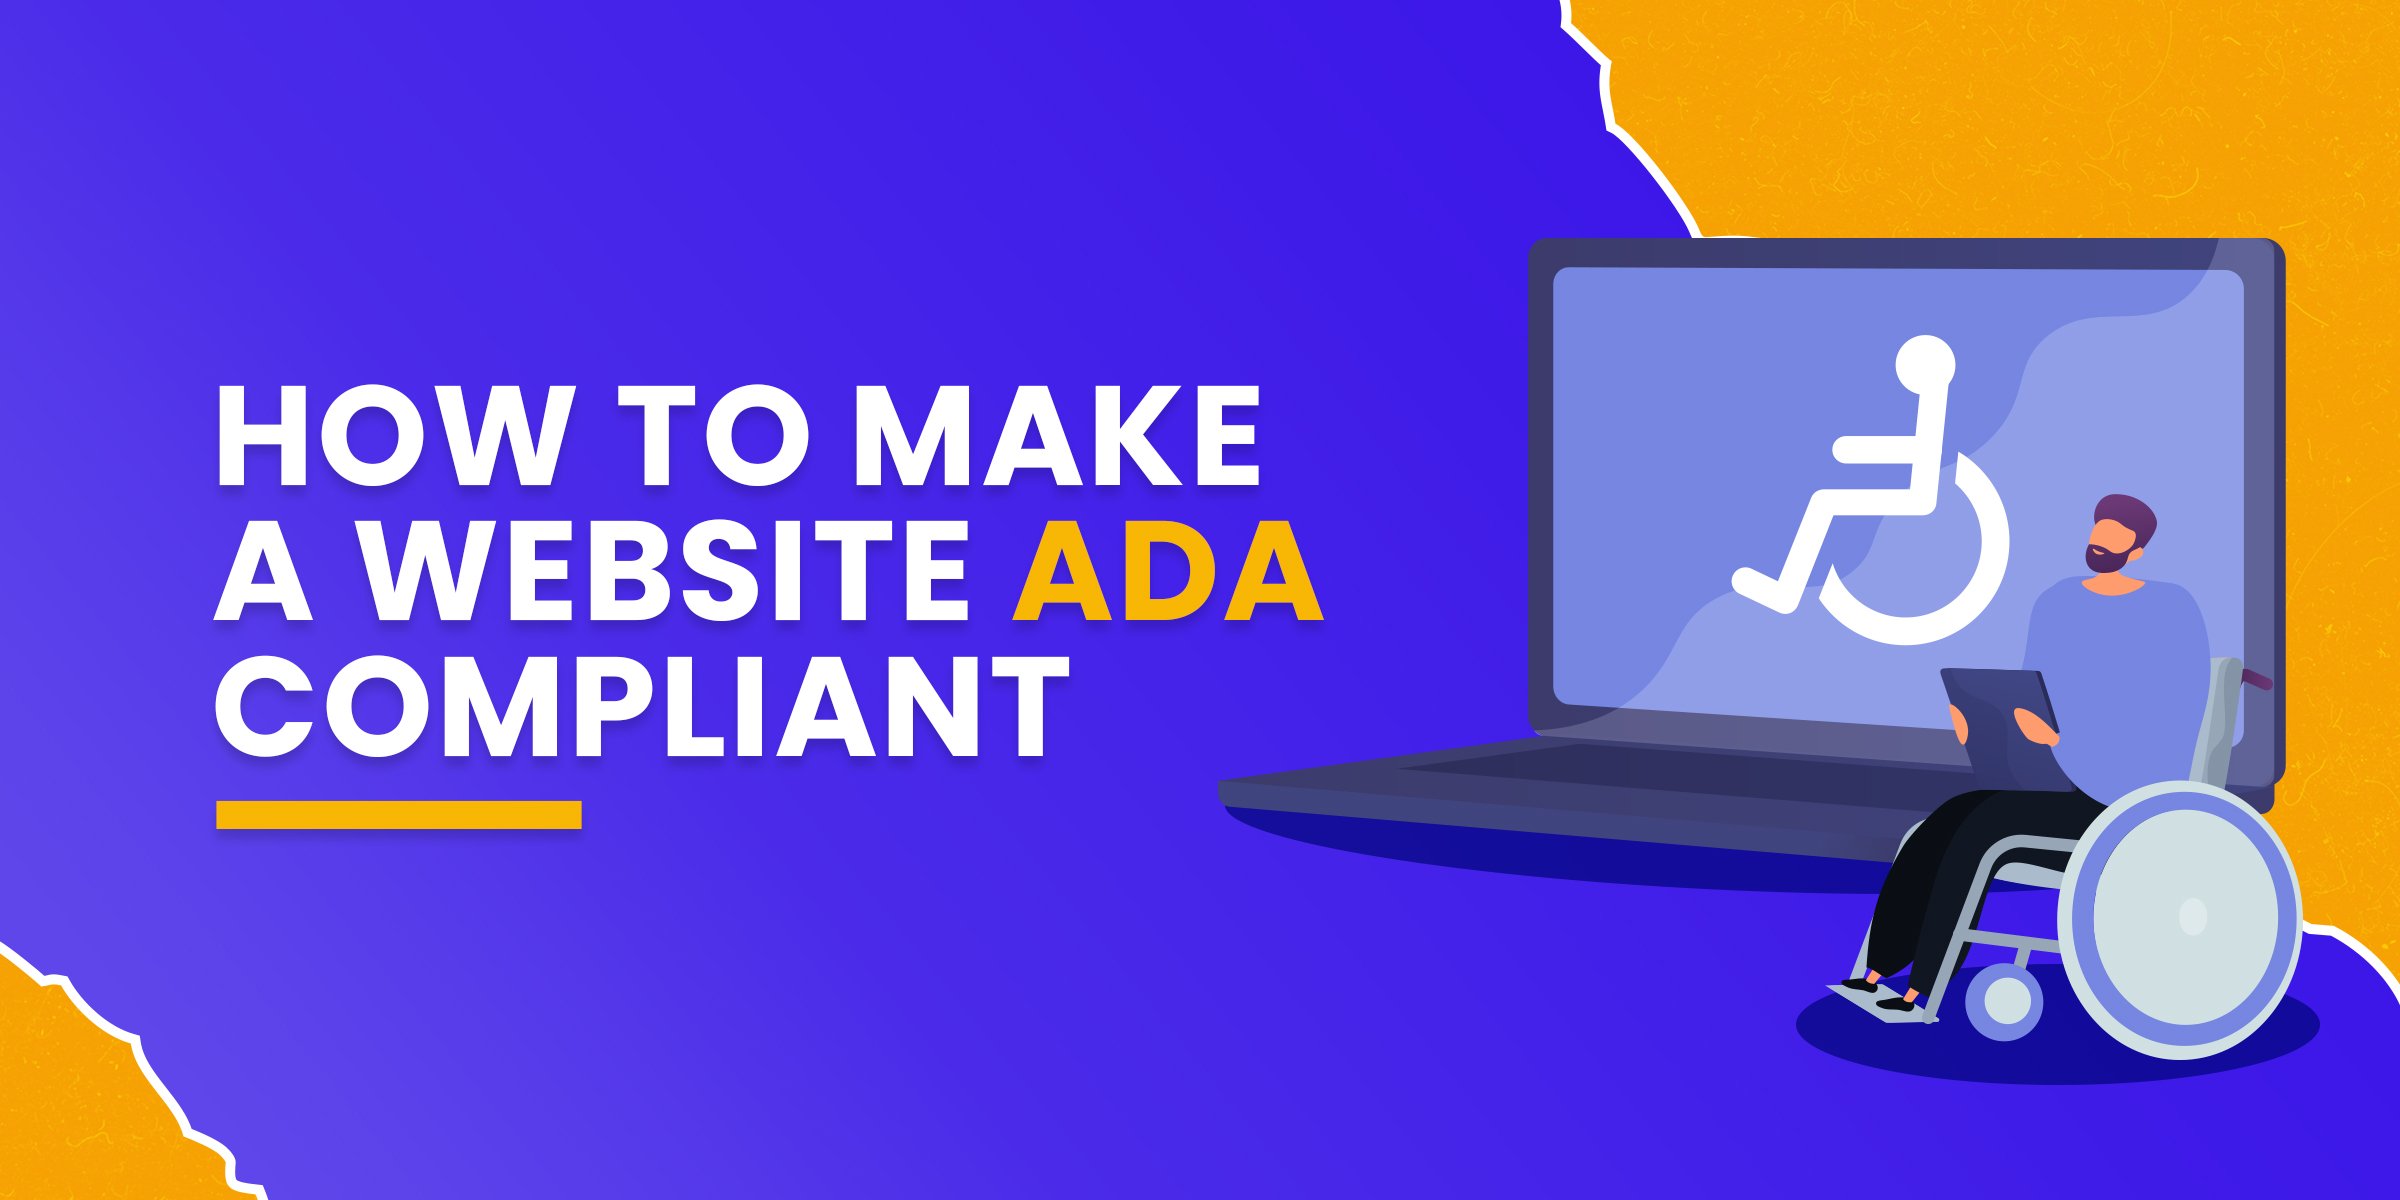 How to Make a Website ADA Compliant